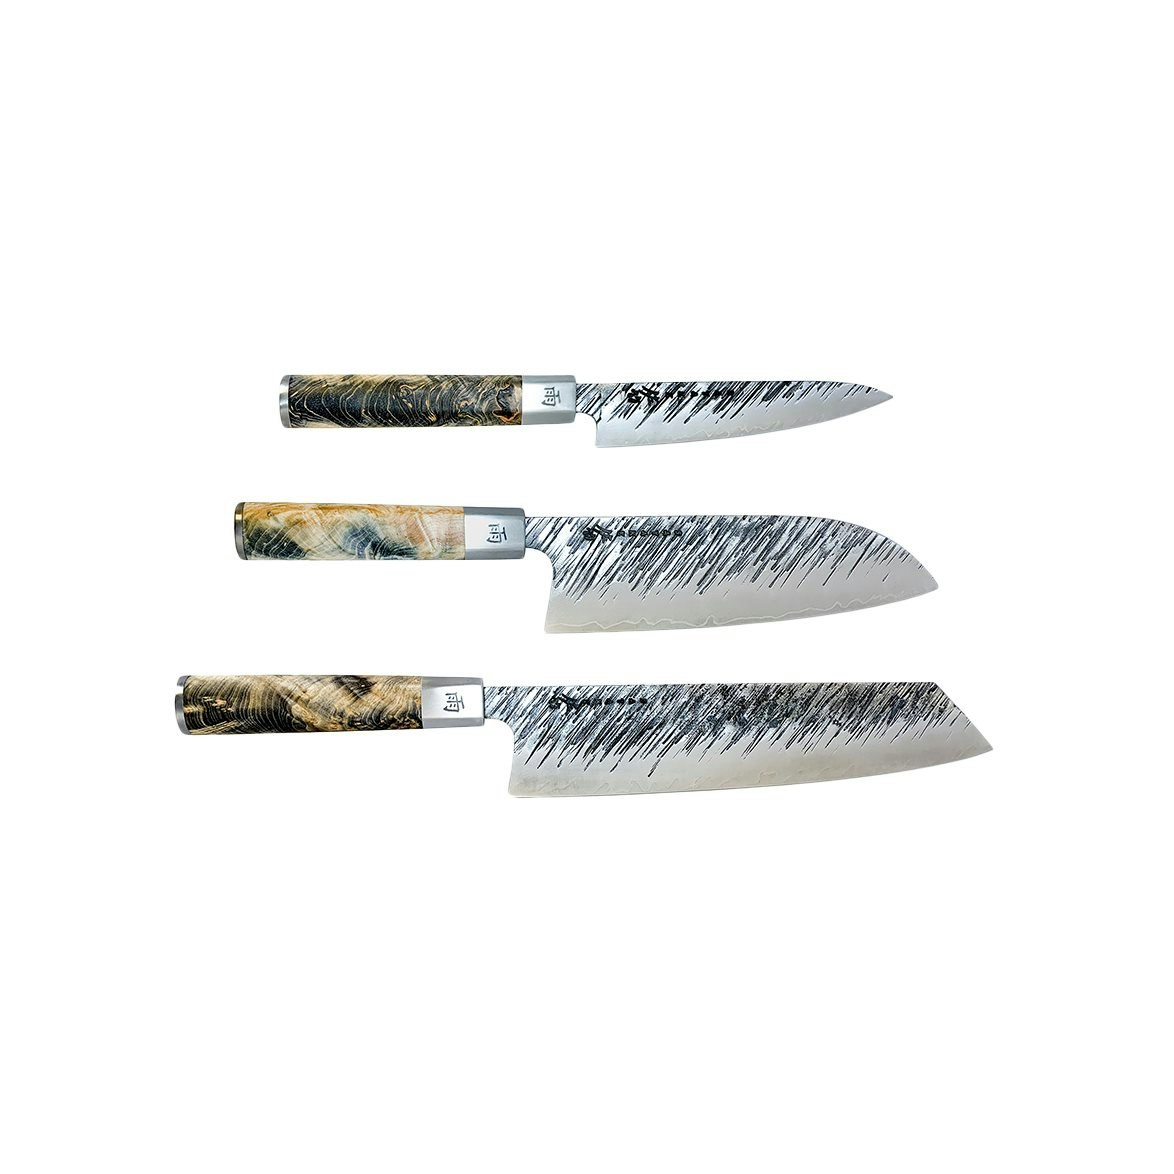 https://royaldesign.com/image/2/satake-ame-knife-set-petty-santoku-kiritsuke-3-pieces-0?w=800&quality=80